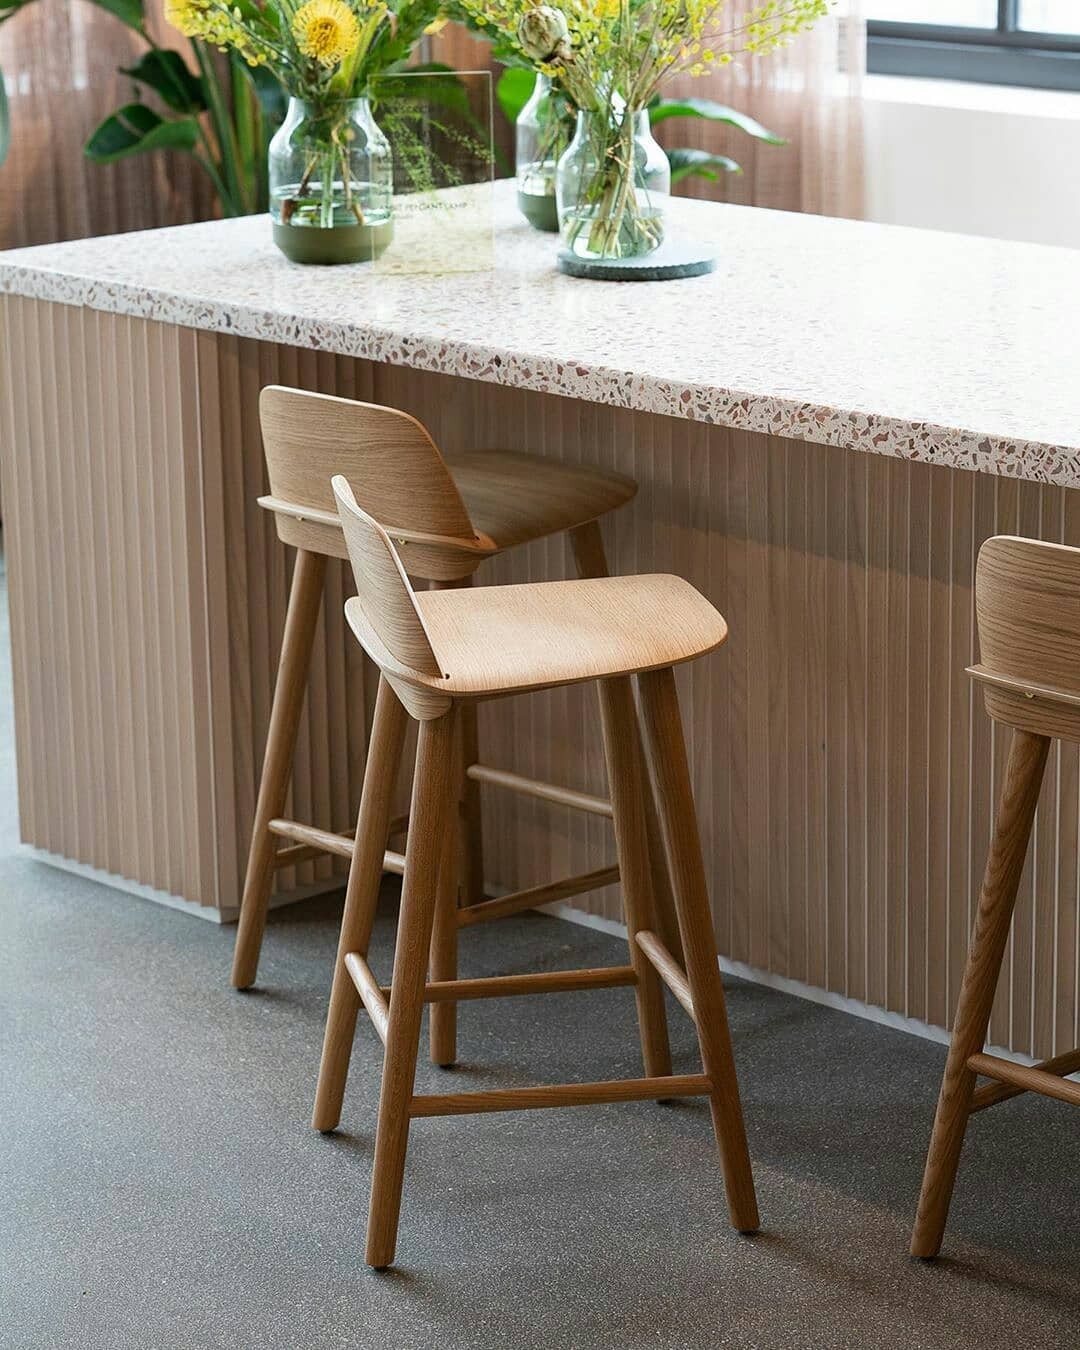 nerd bar stool scandinavian kitchen bar stool with back in timber